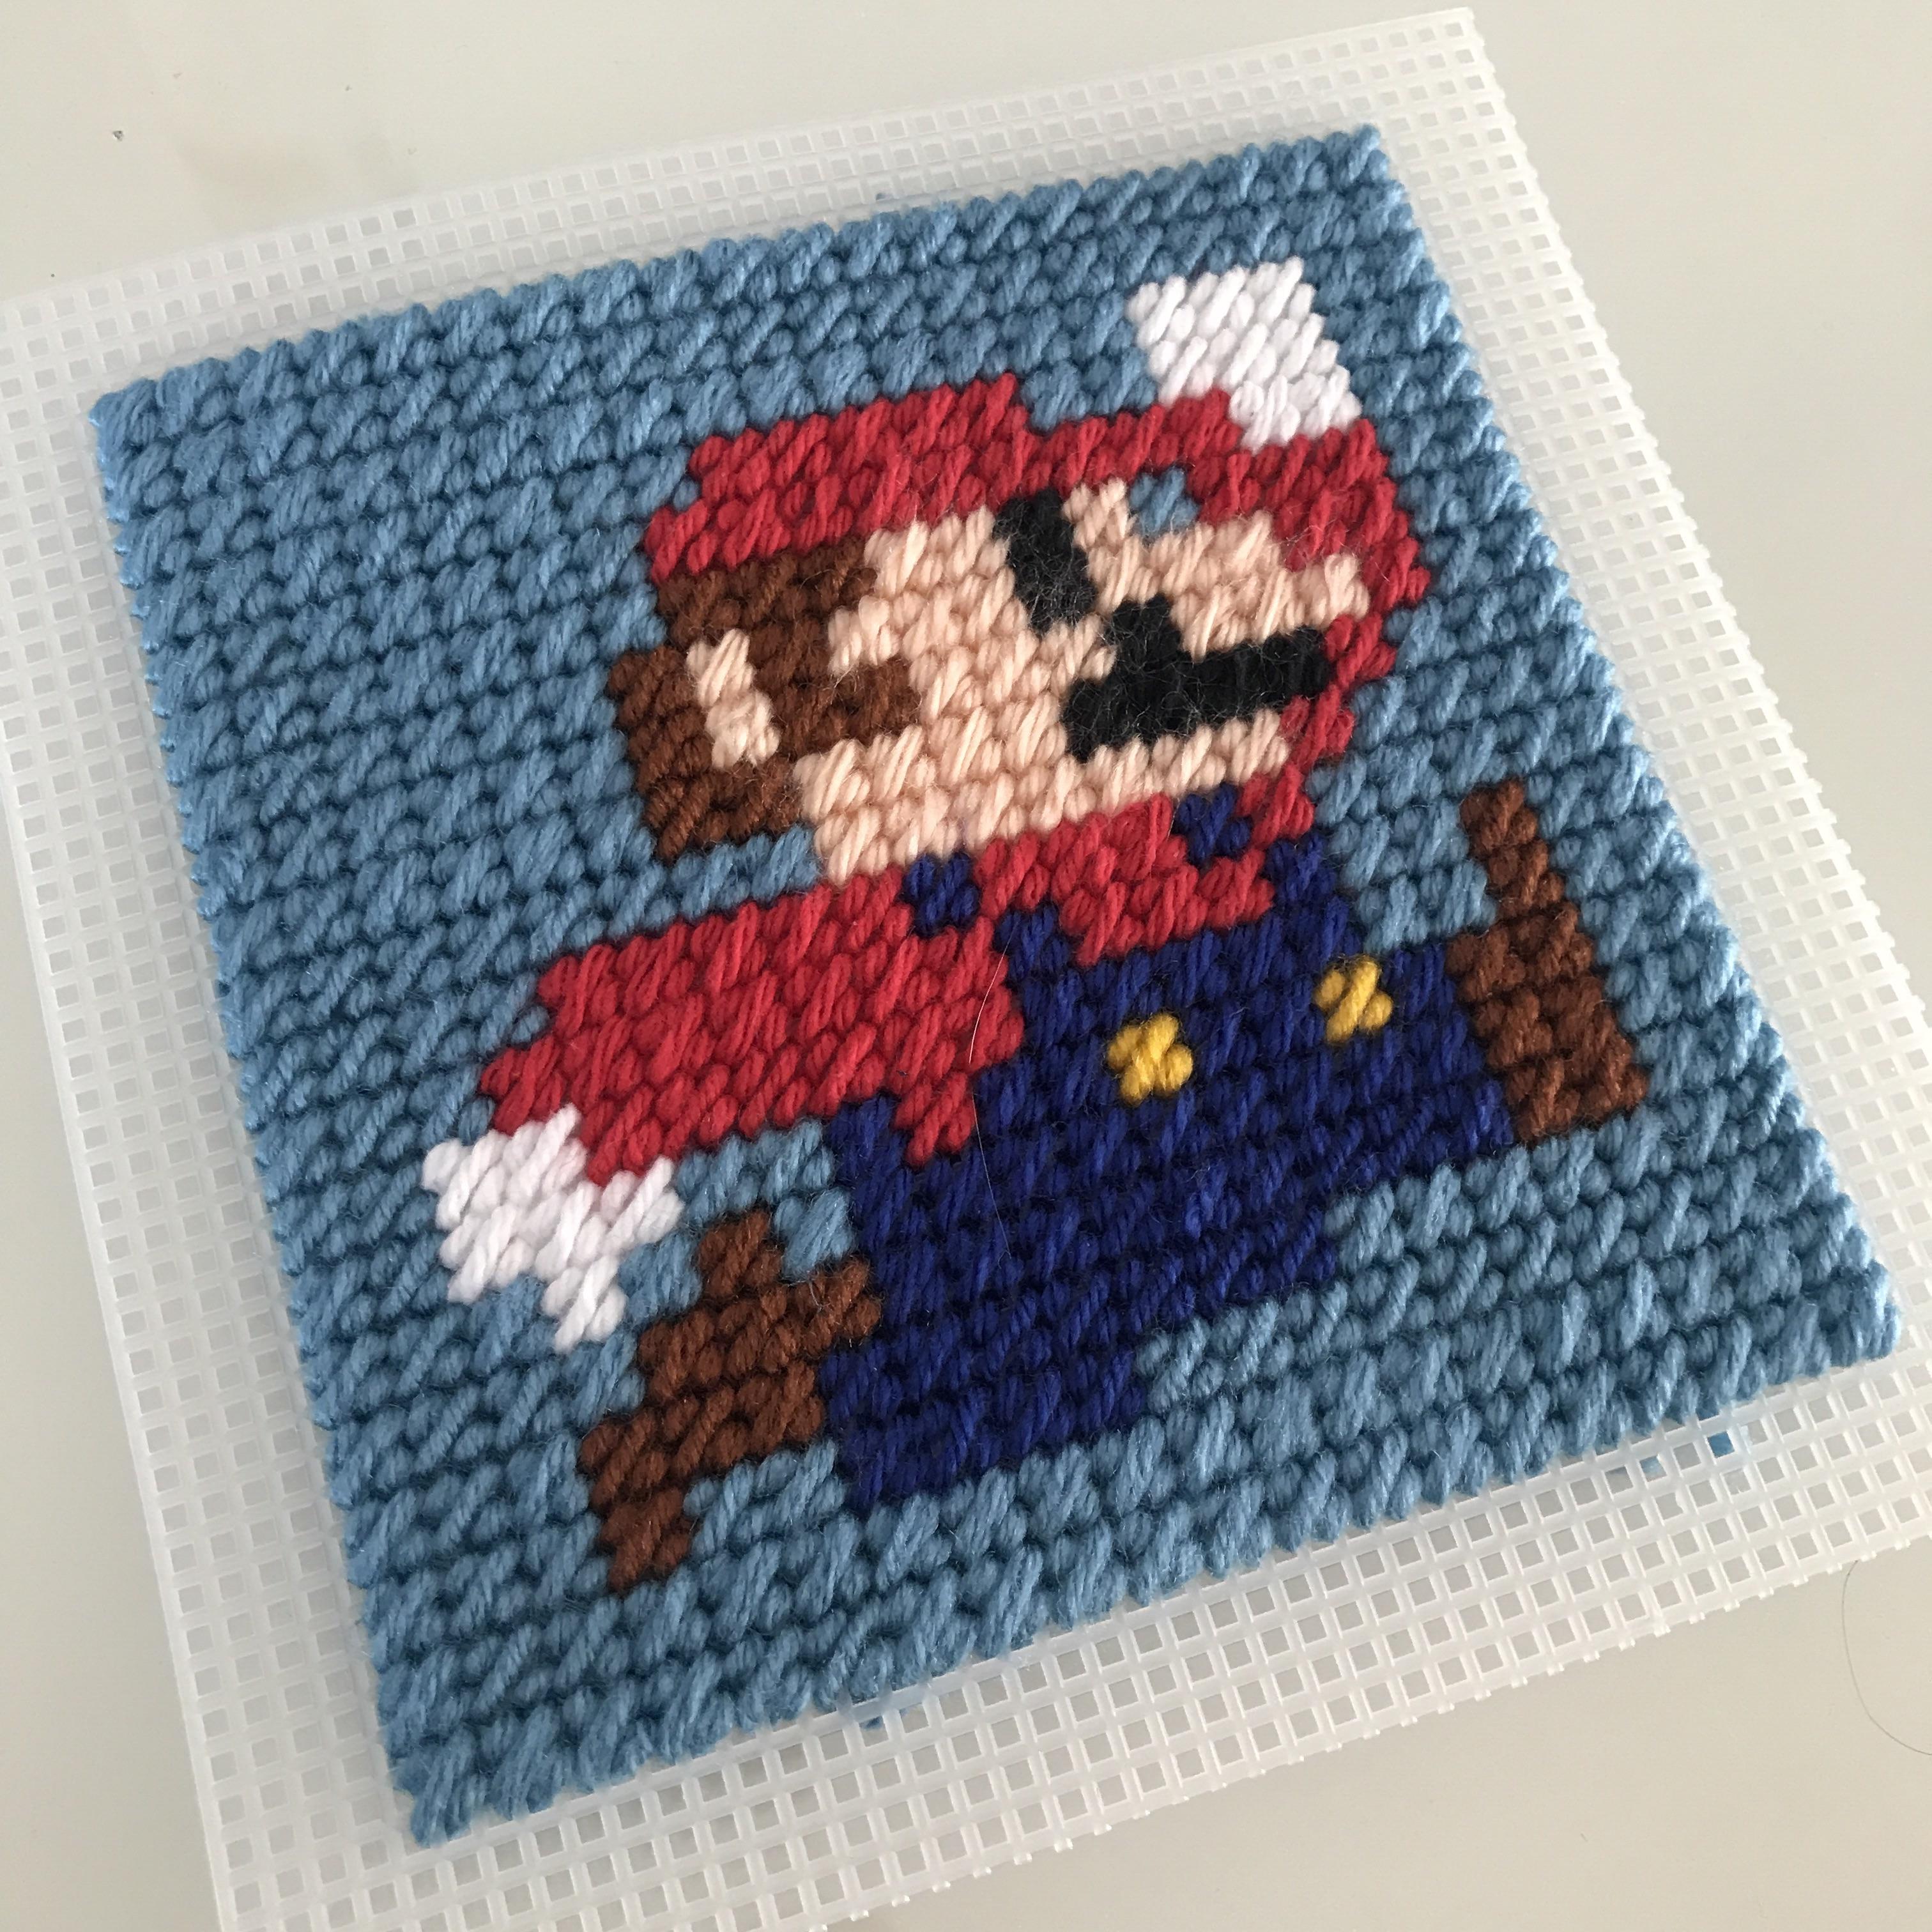 Mario cross-stitched onto plastic canvas